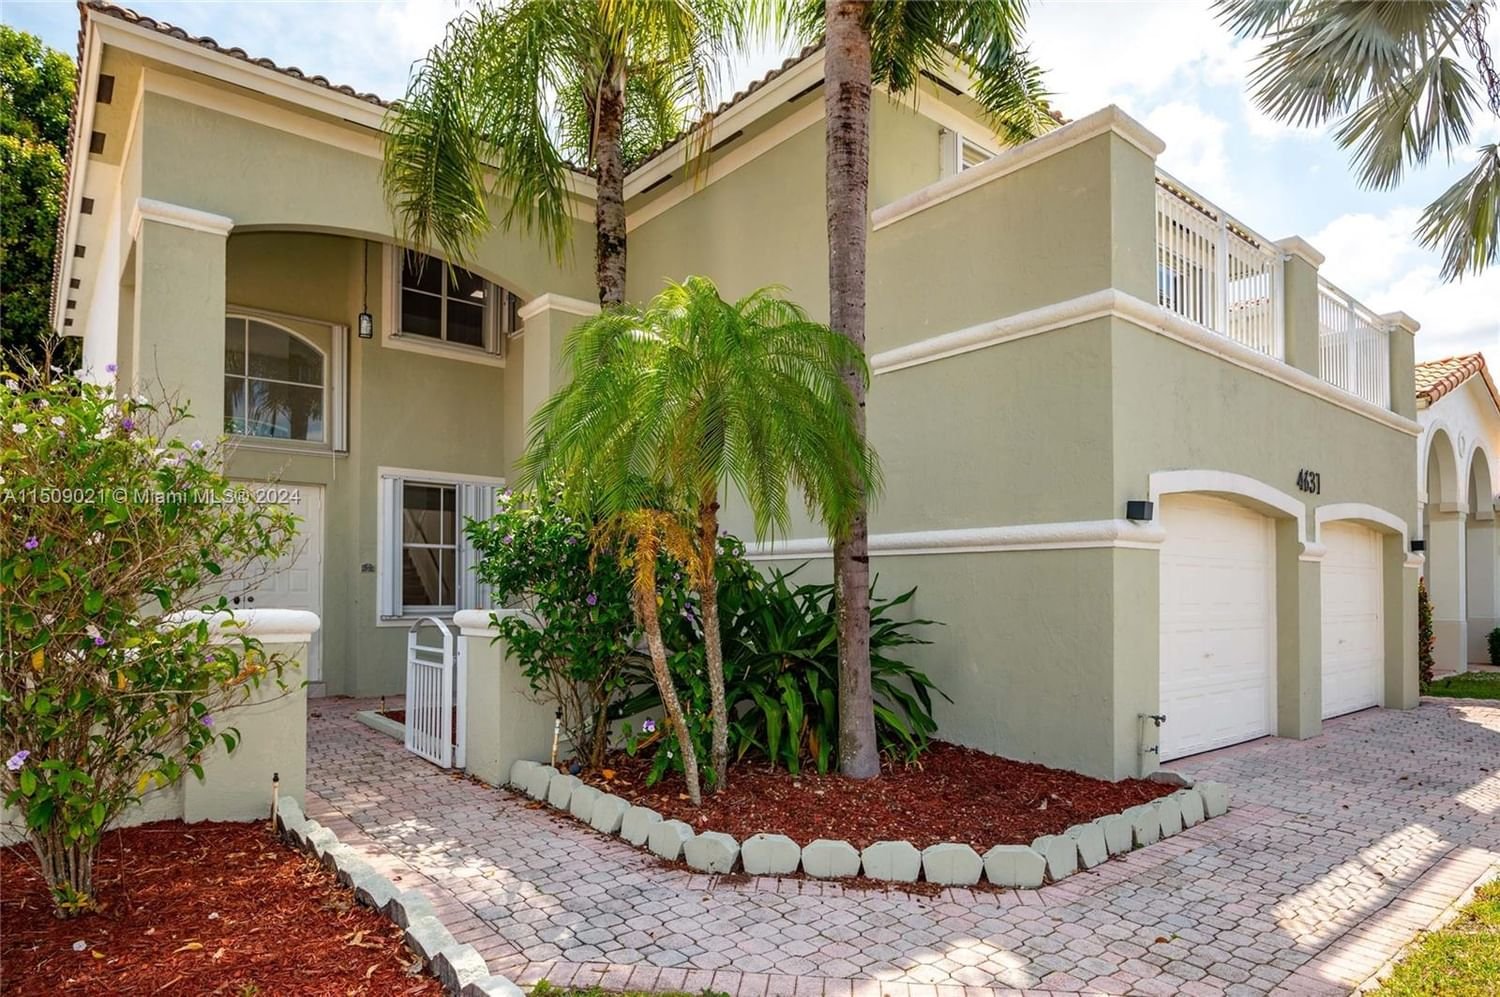 Real estate property located at 4631 94th Ct, Miami-Dade County, GOLDVUE ESTATES, Doral, FL